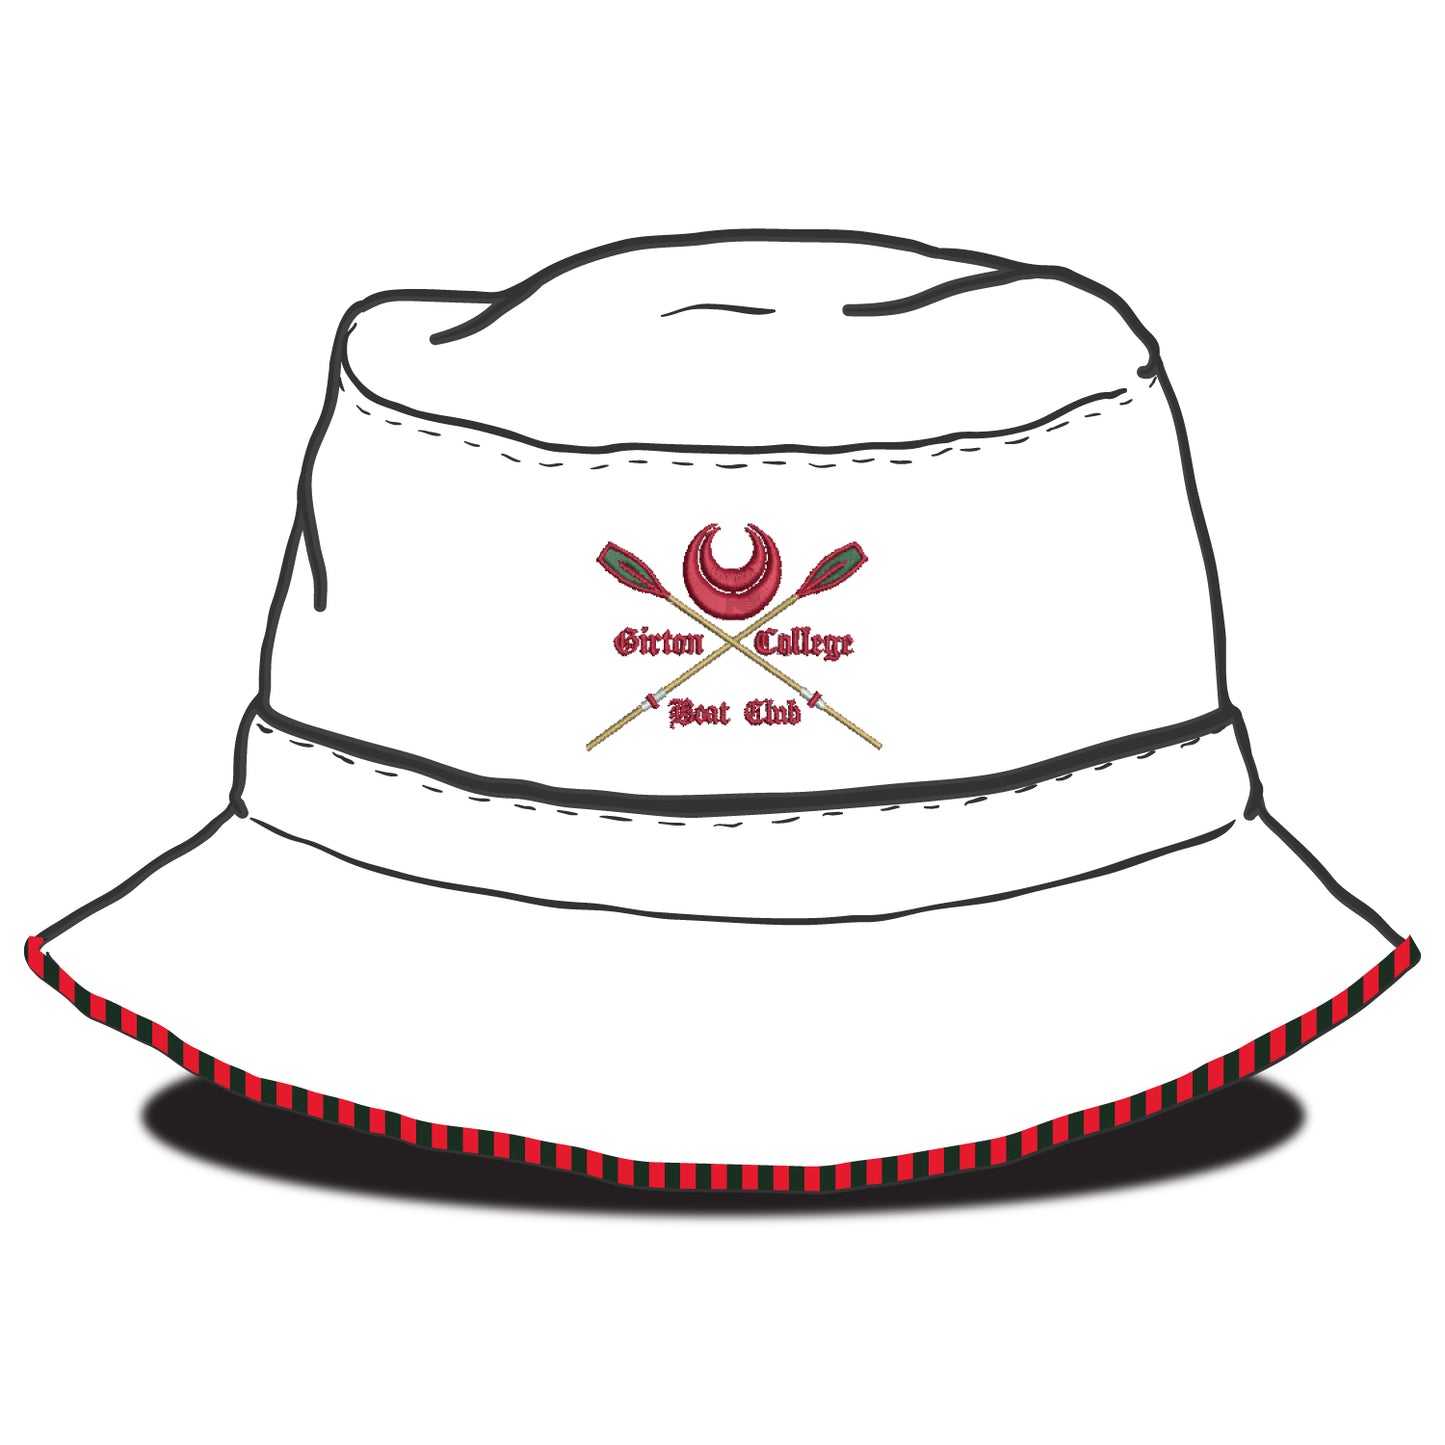 Girton College Bucket Hat